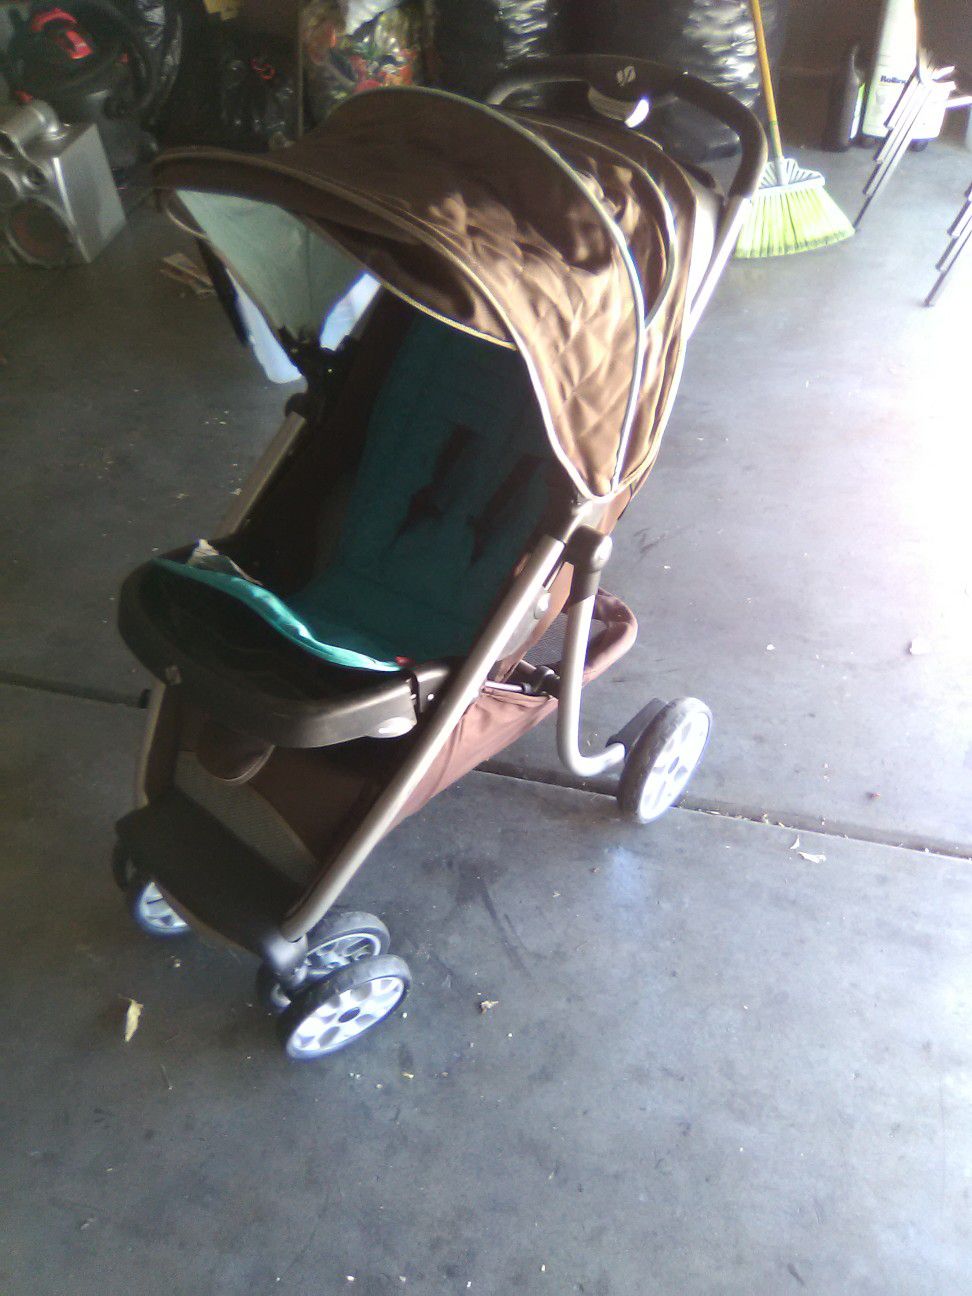 Baby stroller still in good condition asking $10